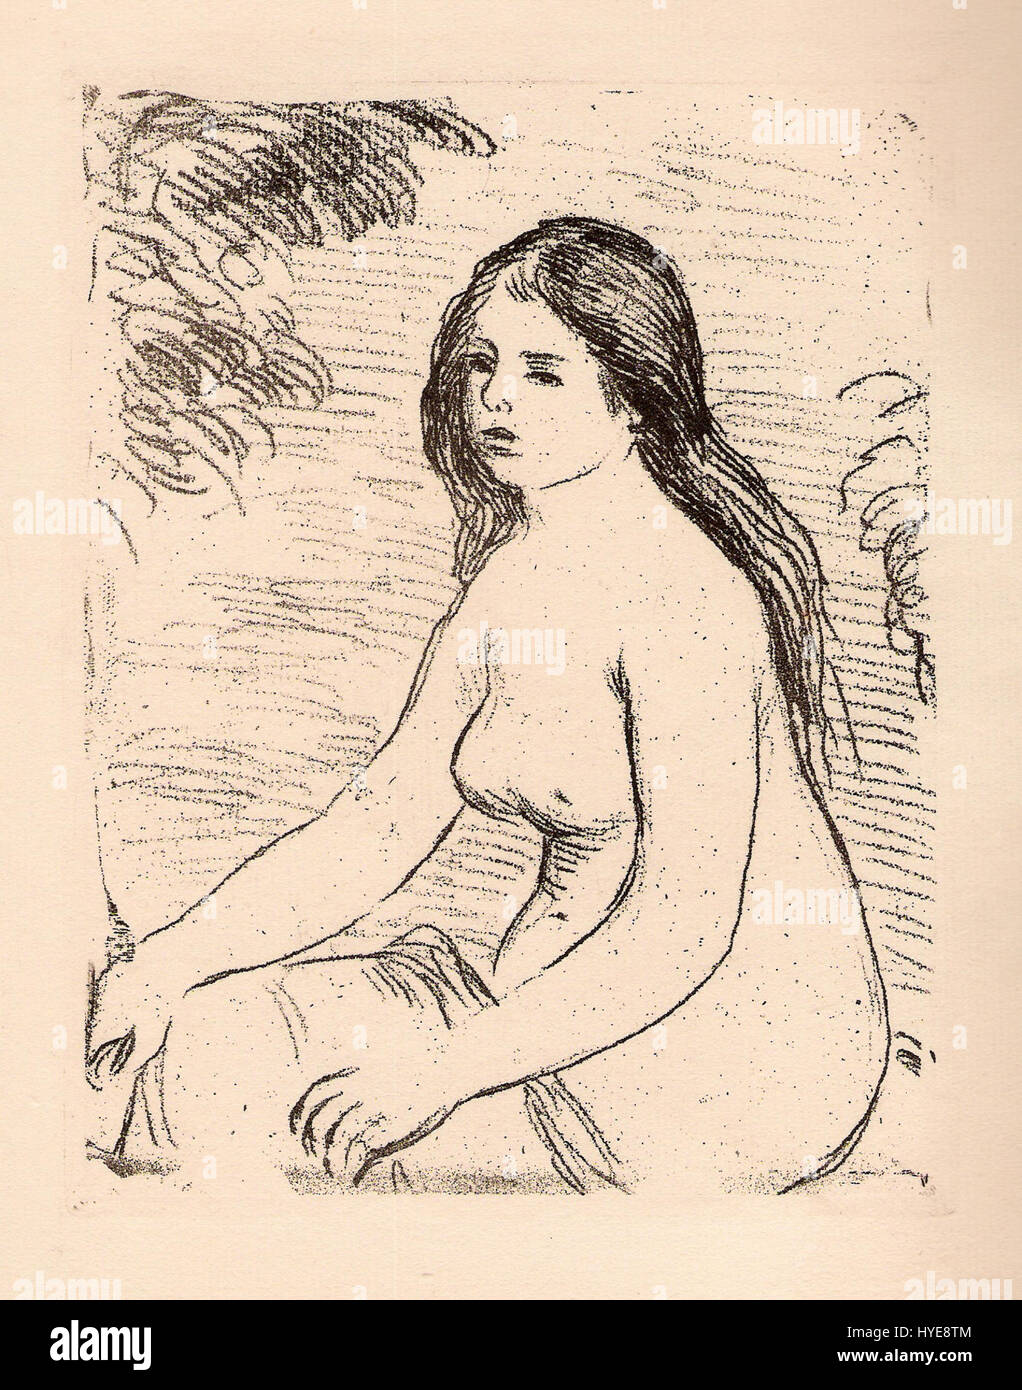 Pierre Auguste Renoir   Femme nue assise   Litho Stock Photo